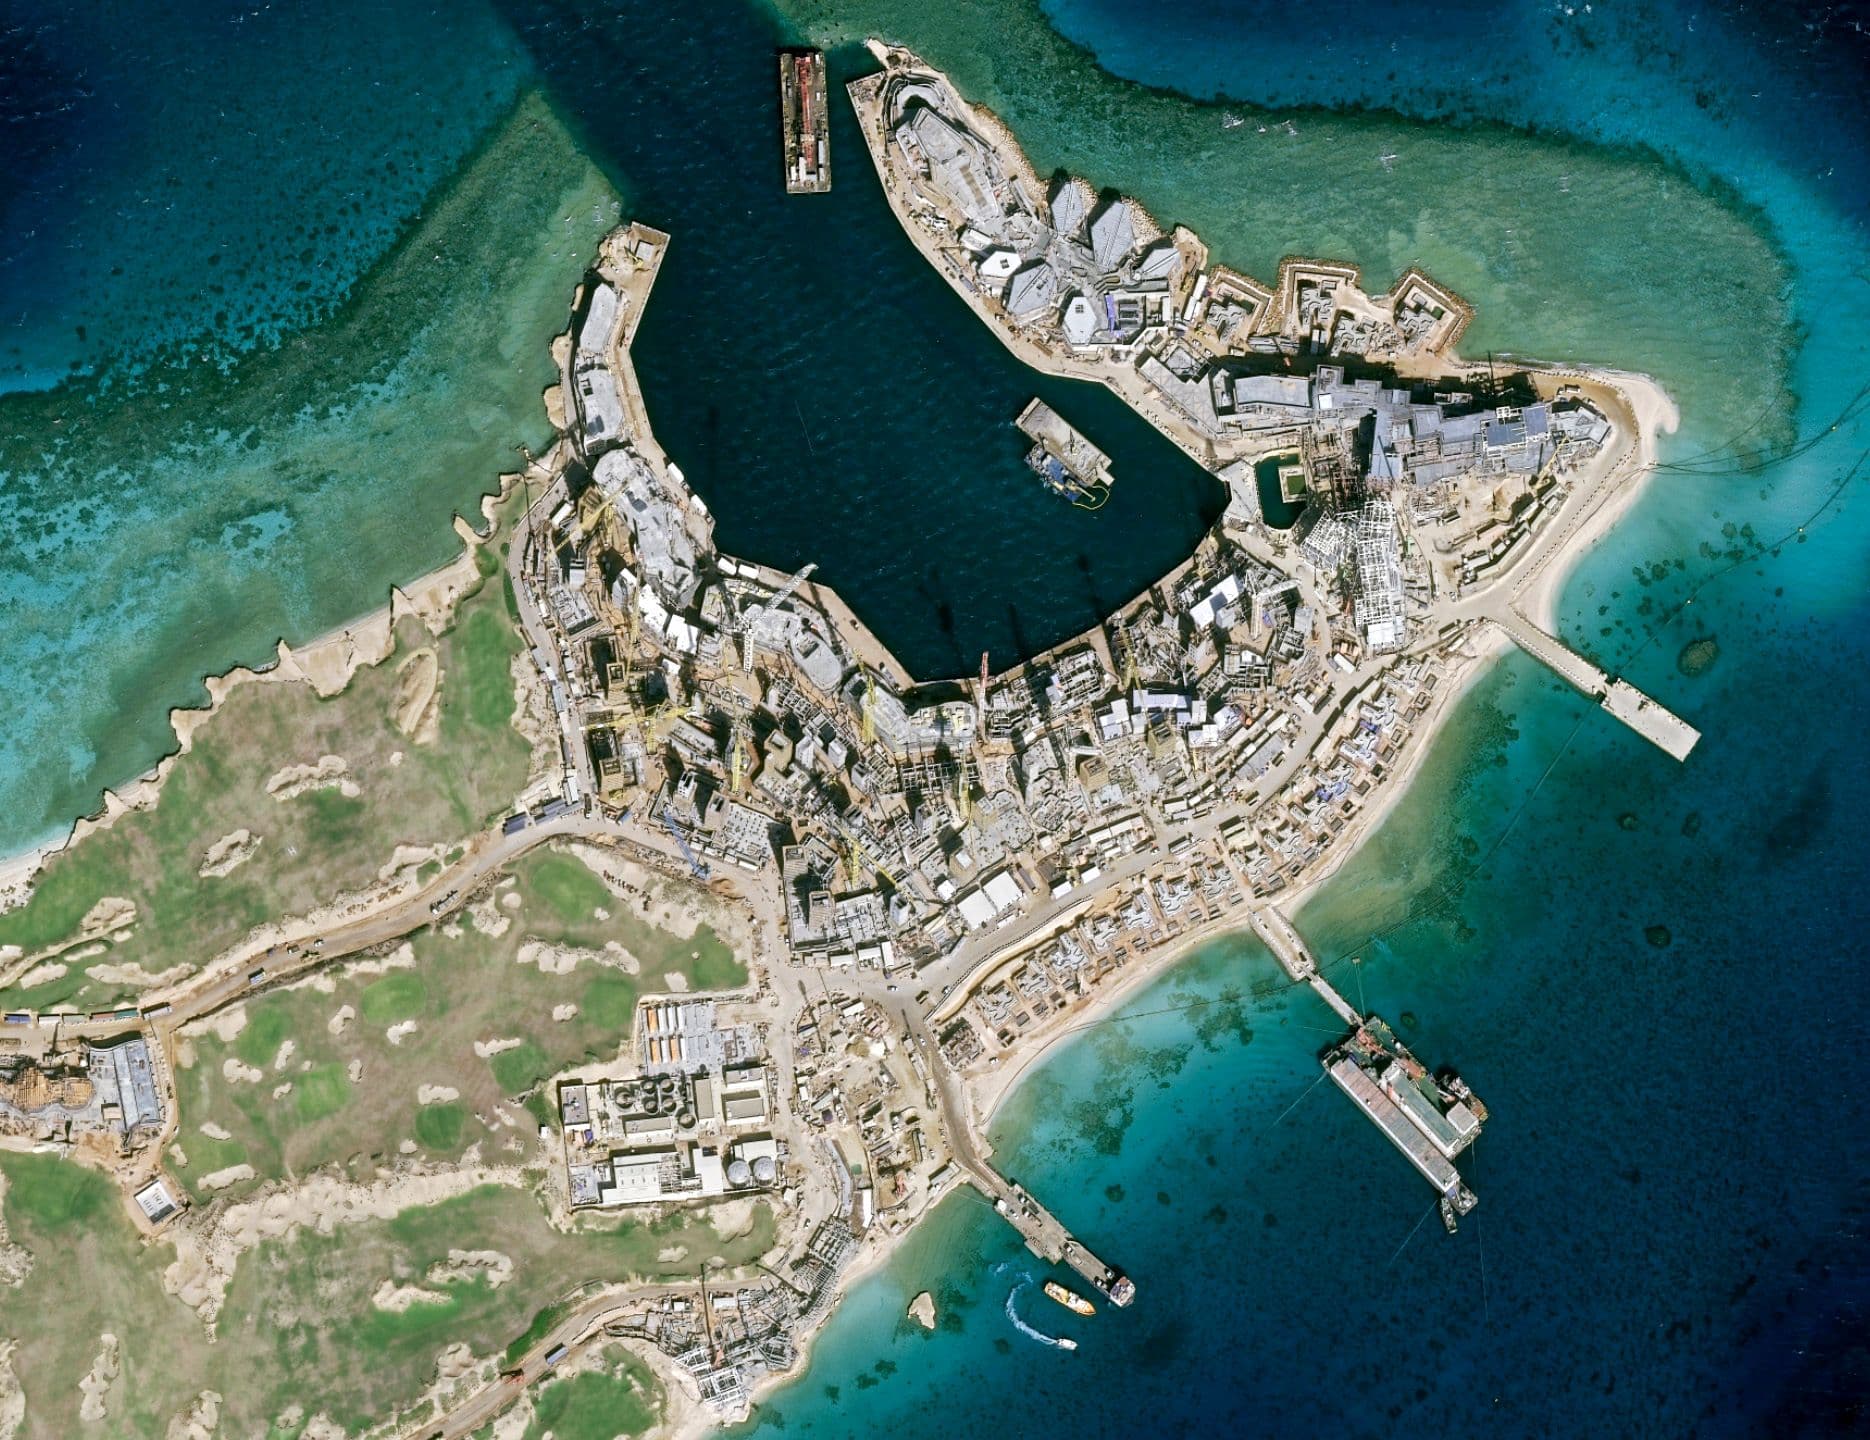 Pléiades Neo satellite image, Sindalah, Saudia Arabia l HD15